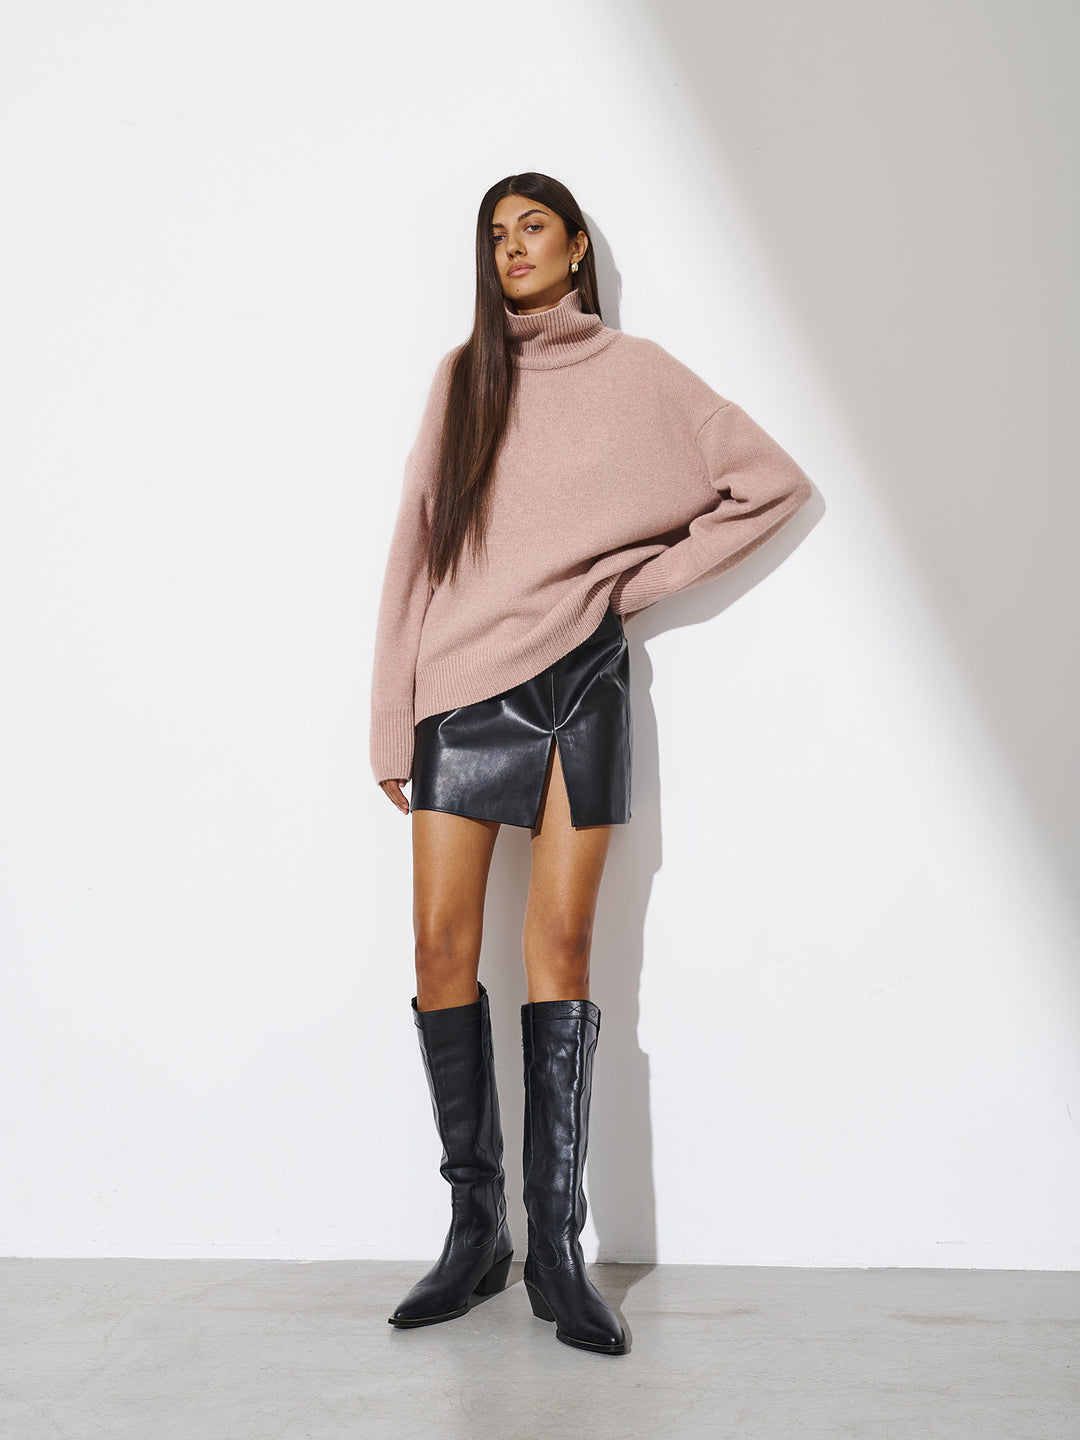 Lora turtleneck 100% cashmere sweater (light pink)